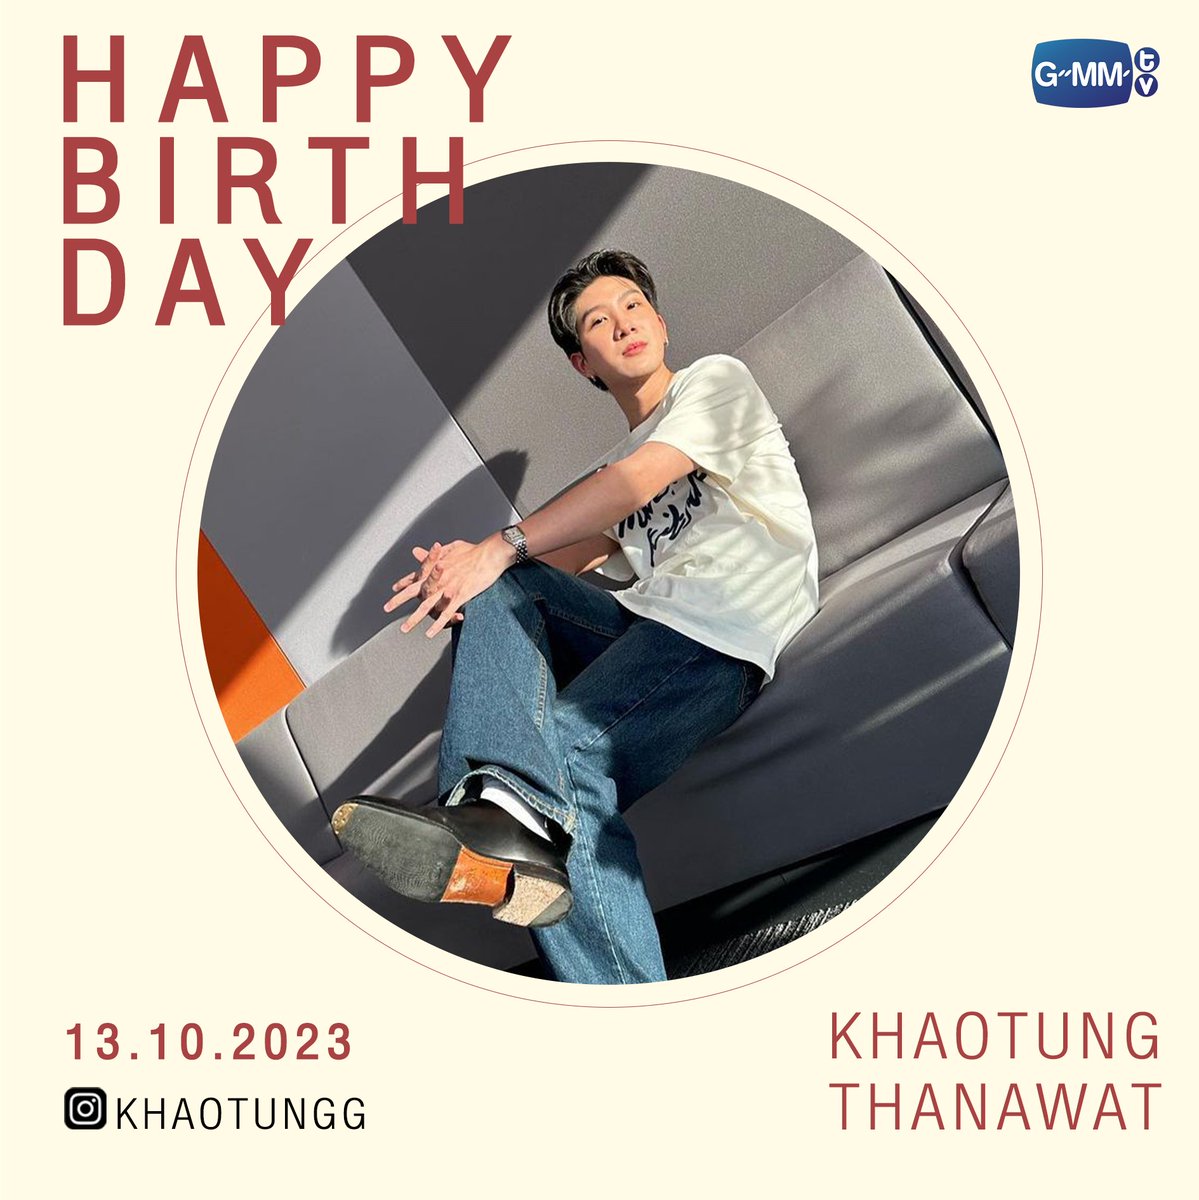 'Happy Birthday to Khaotung” 🎂🧡 ขอให้เป็นวันเกิดที่มีแต่ความสุข มีแต่สิ่งที่ดีเข้ามาในชีวิตนะคะ @myktnw #GMMTV